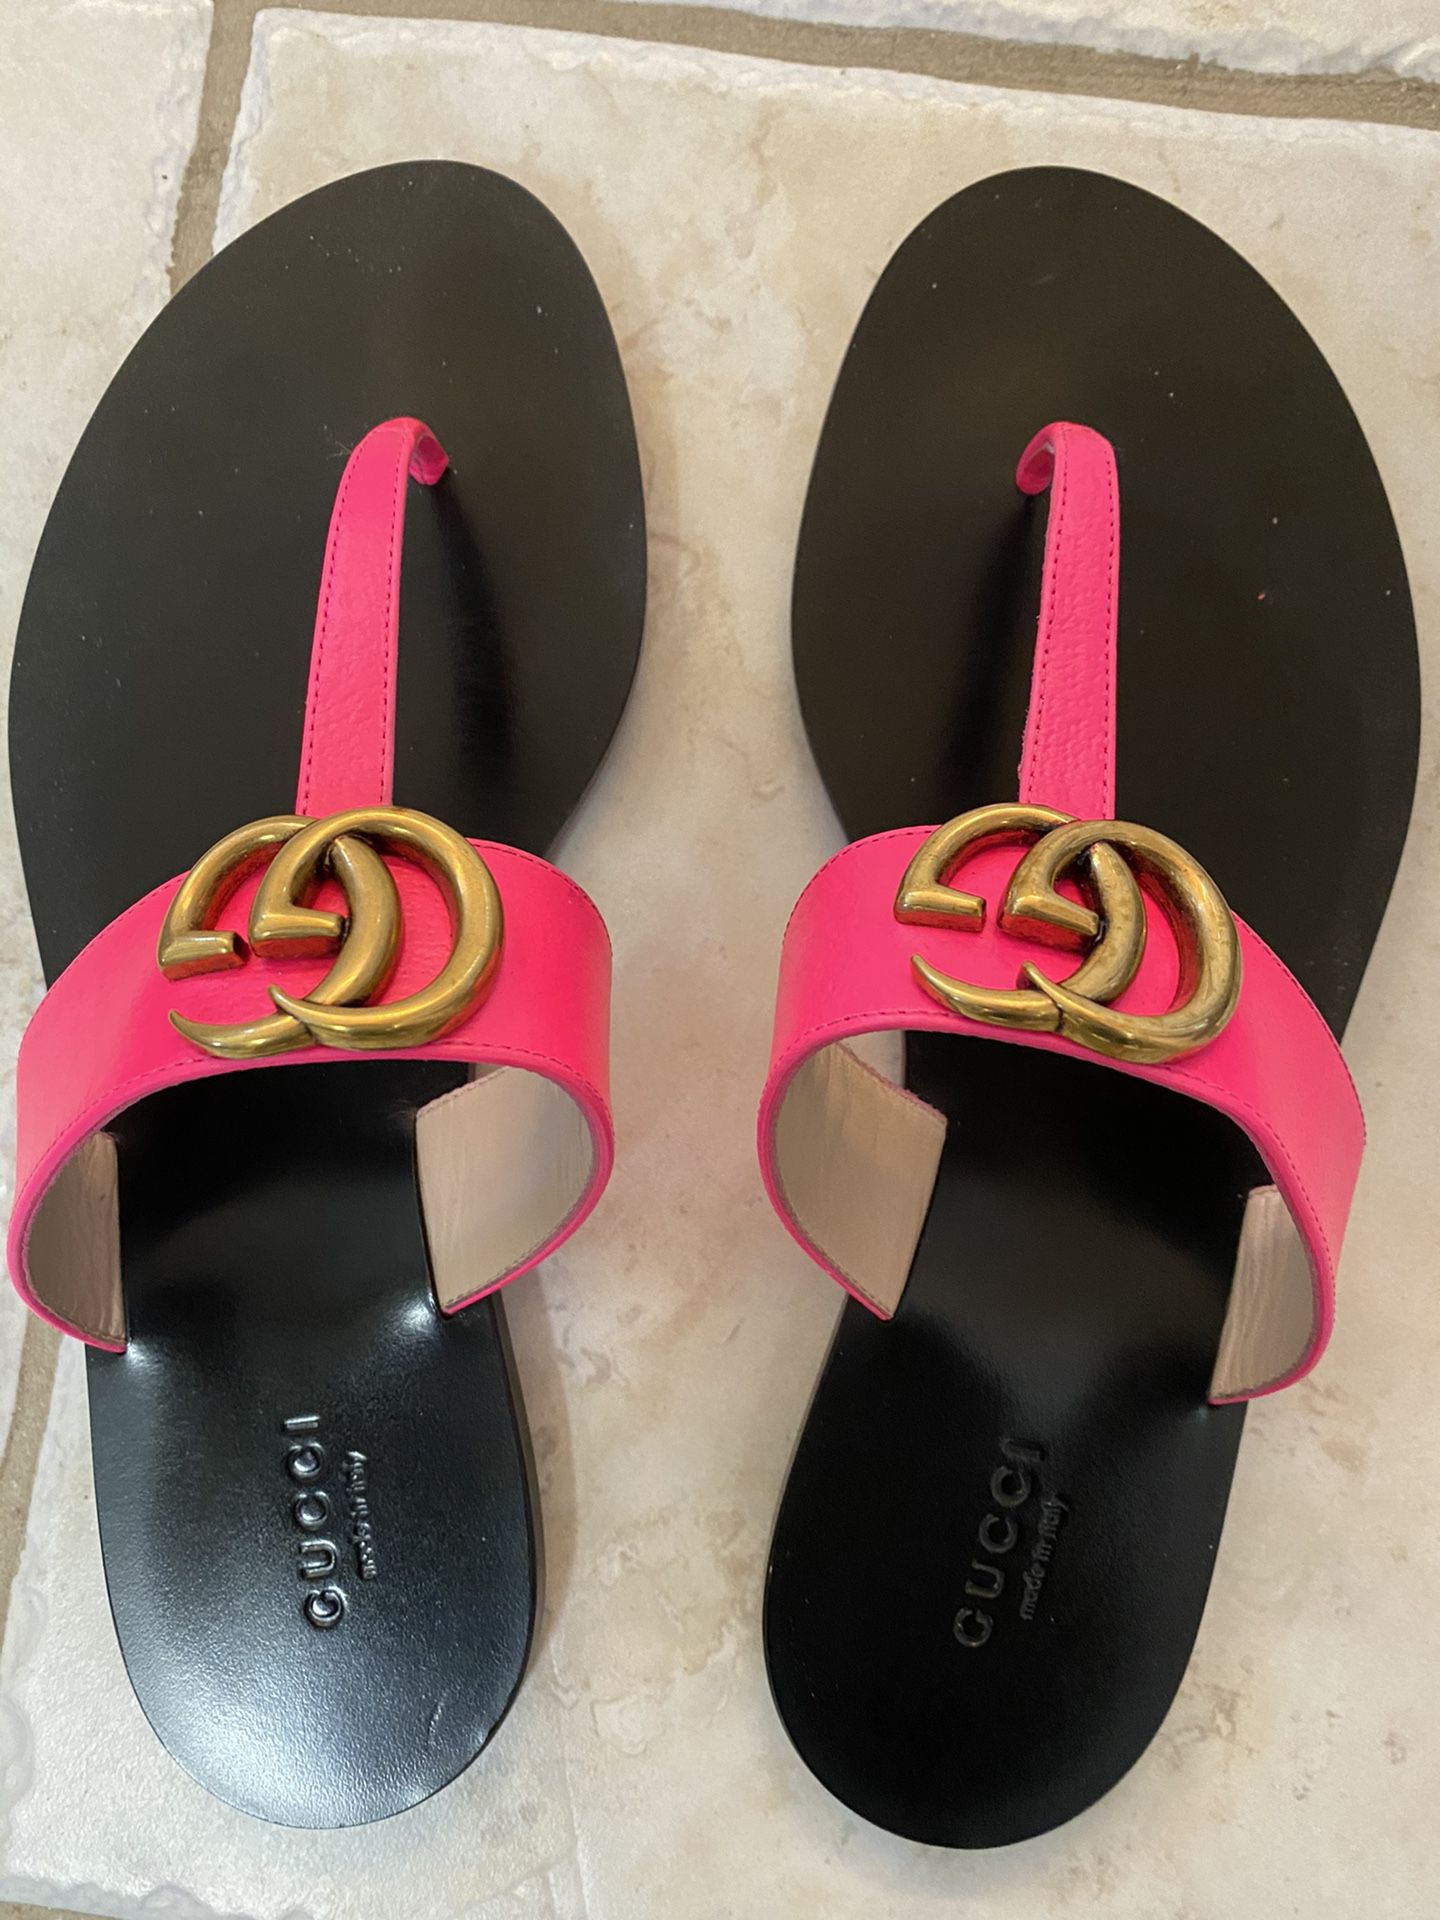 Gucci sandals size 38